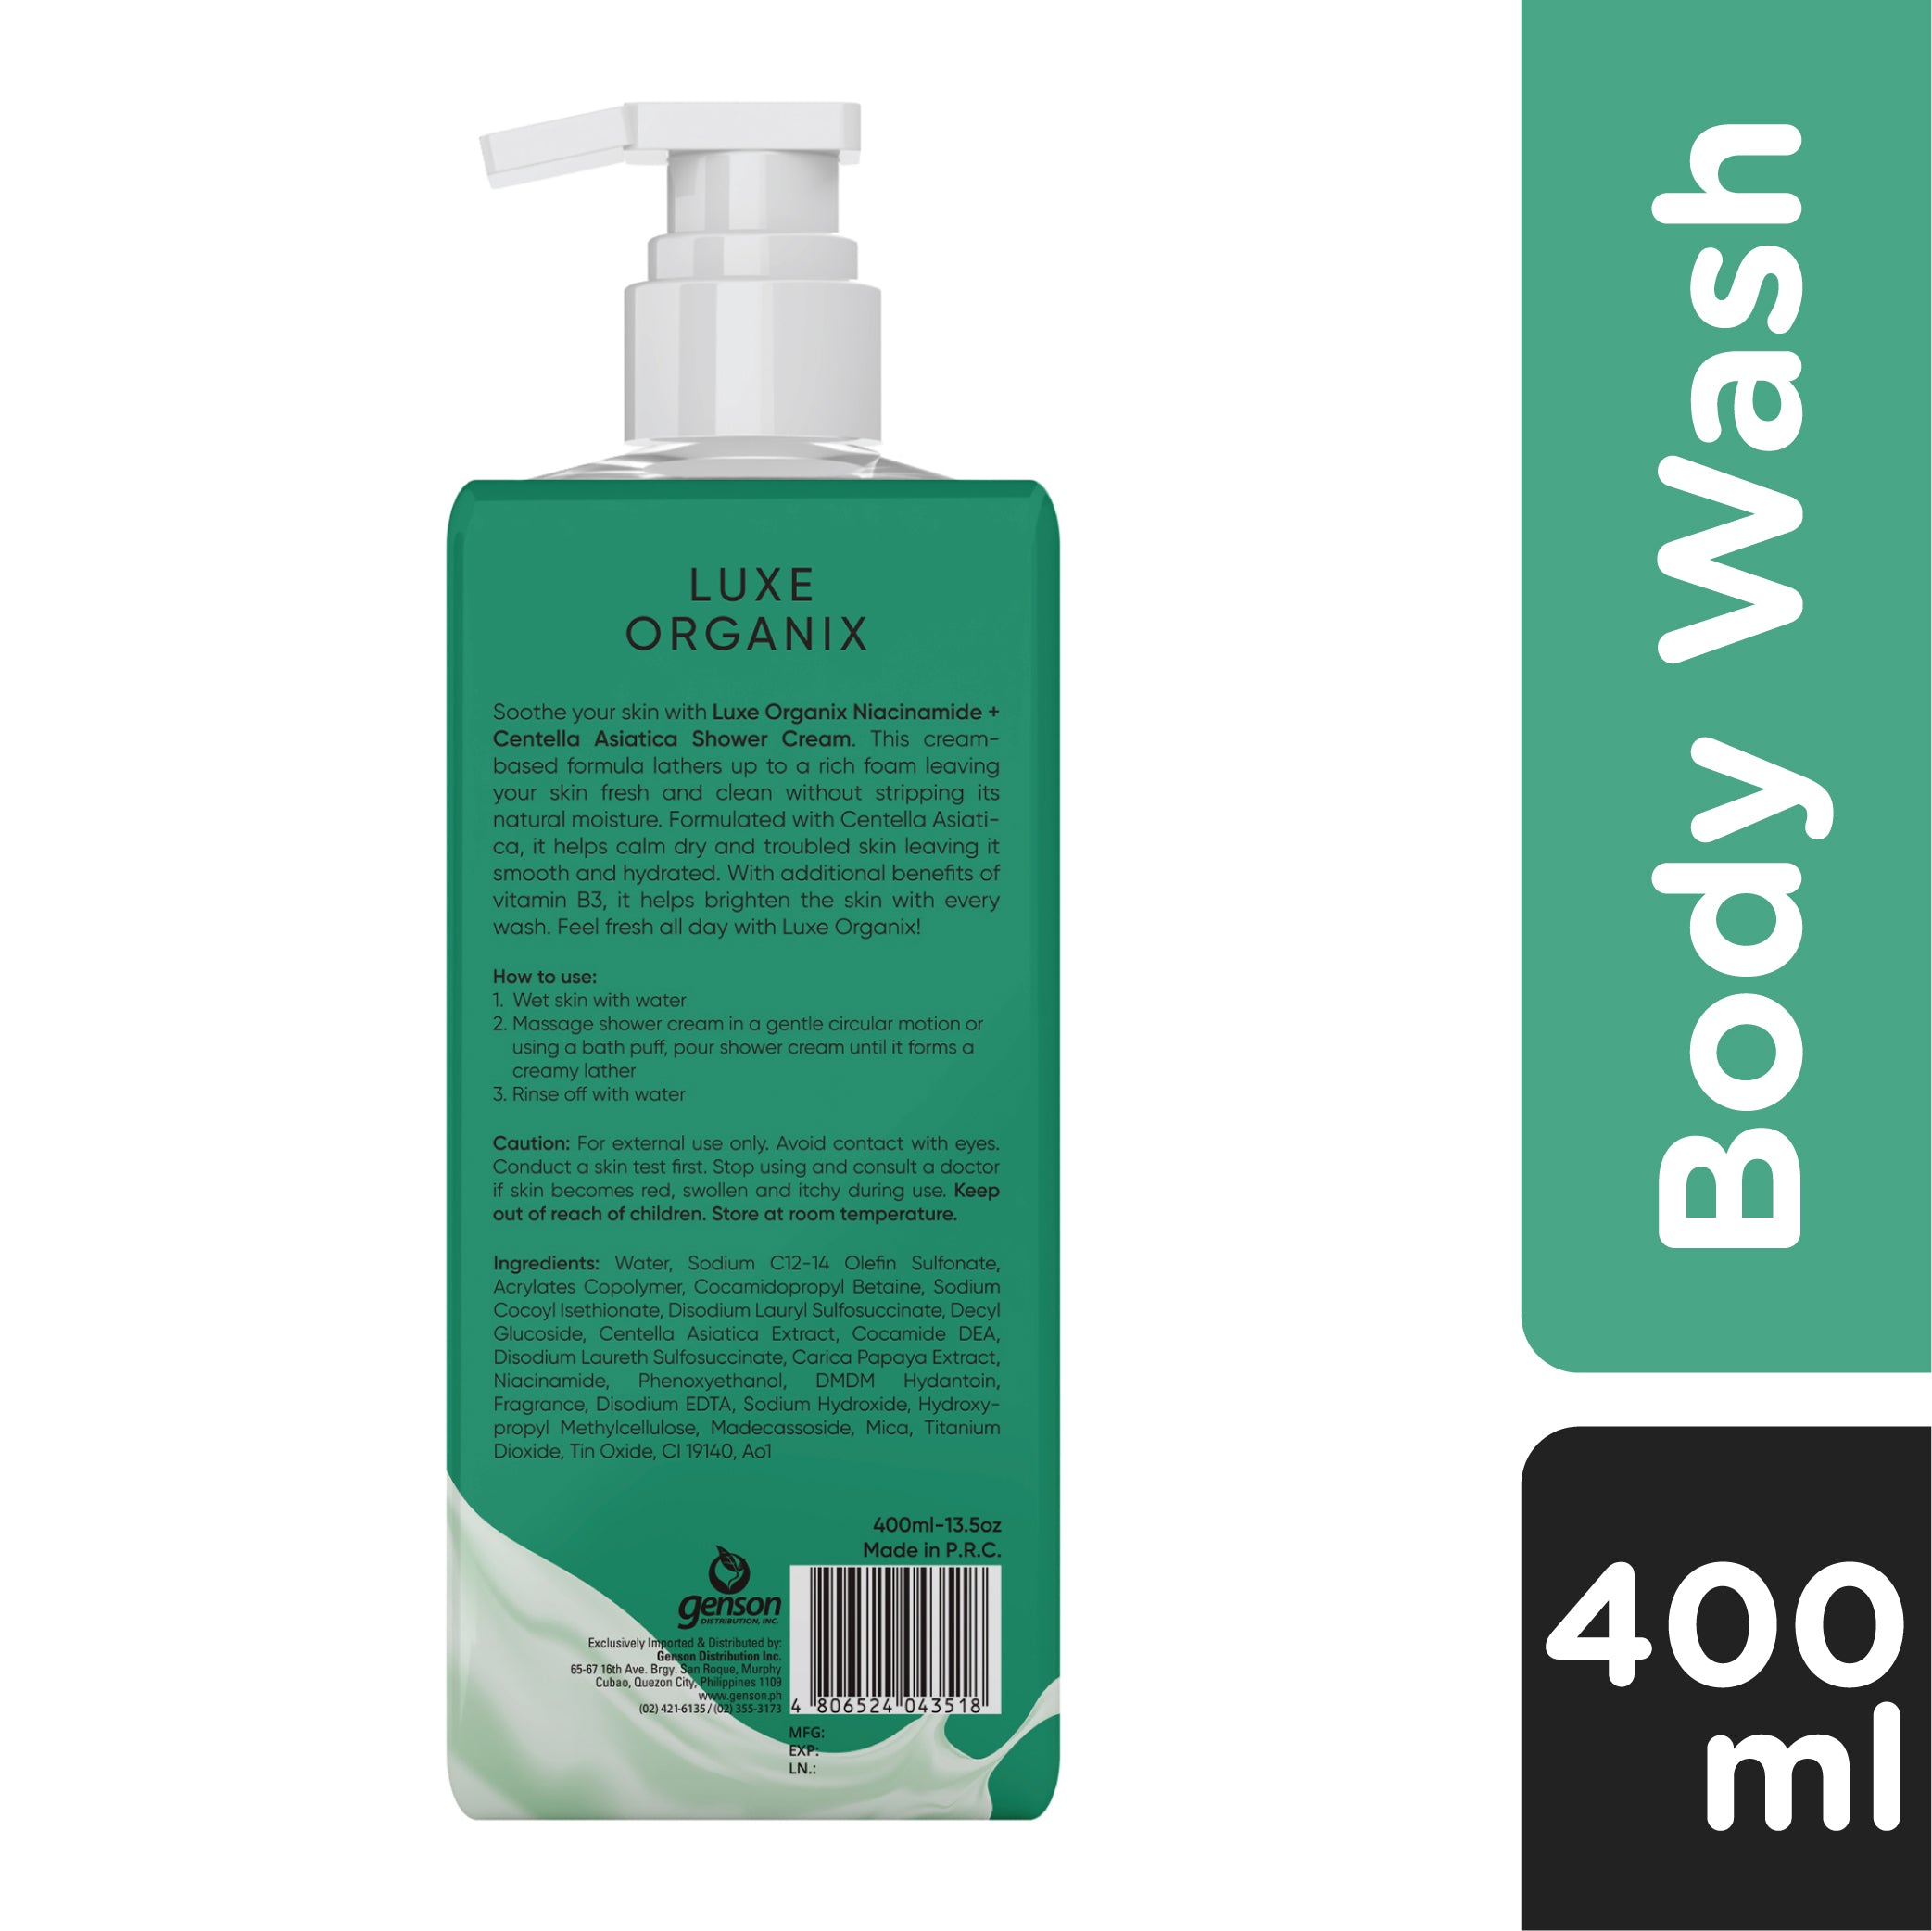 Niacinamide + Centella Asiatica + Papaya Extract Shower Cream 400ml